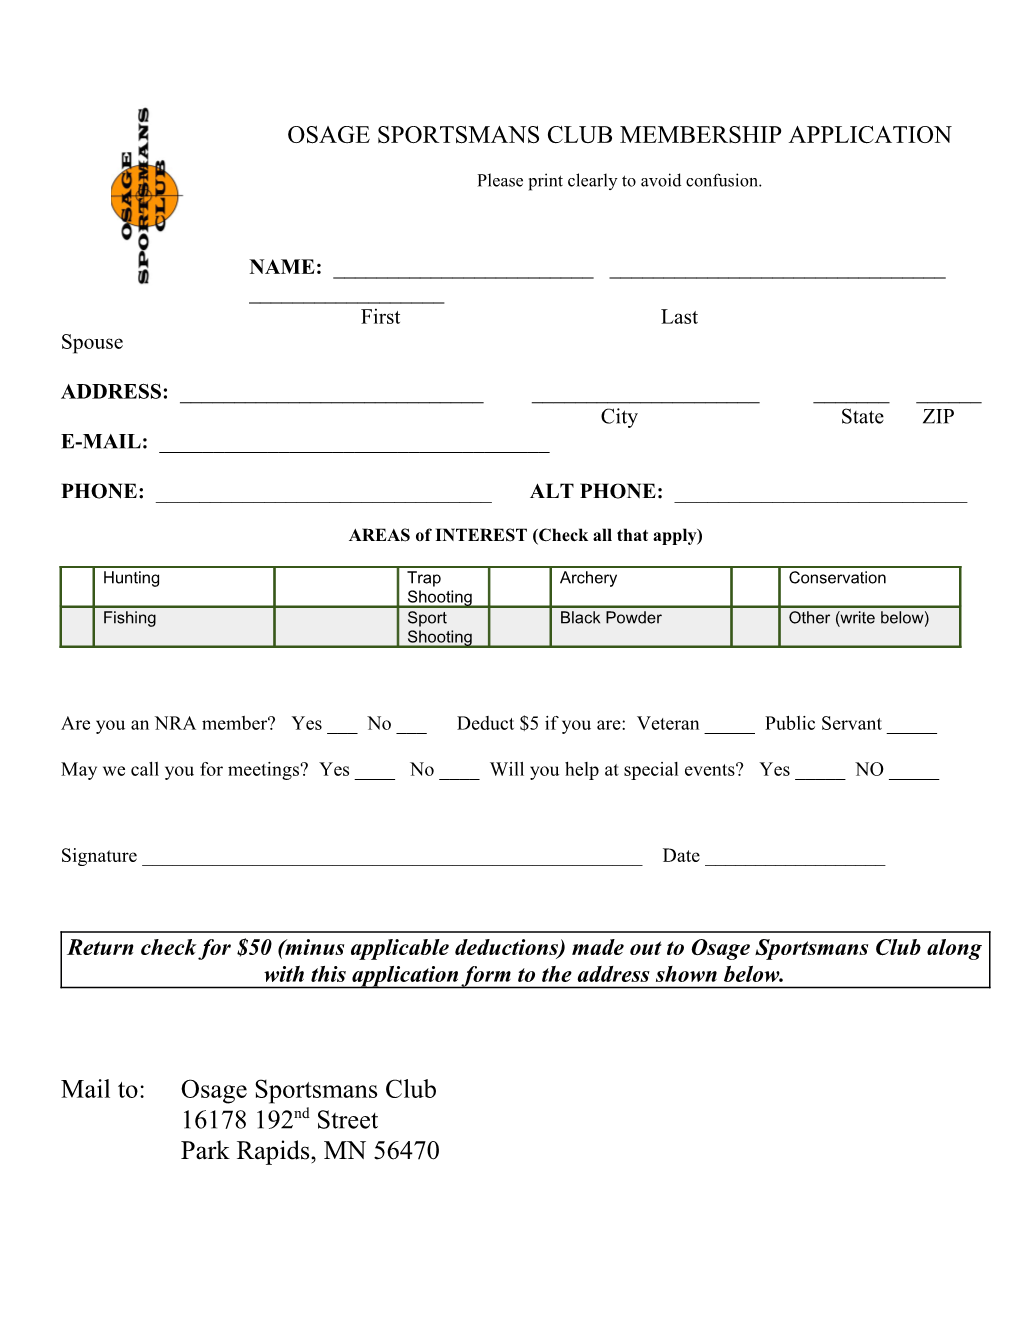 Osage Sportsmans Club Membership Application